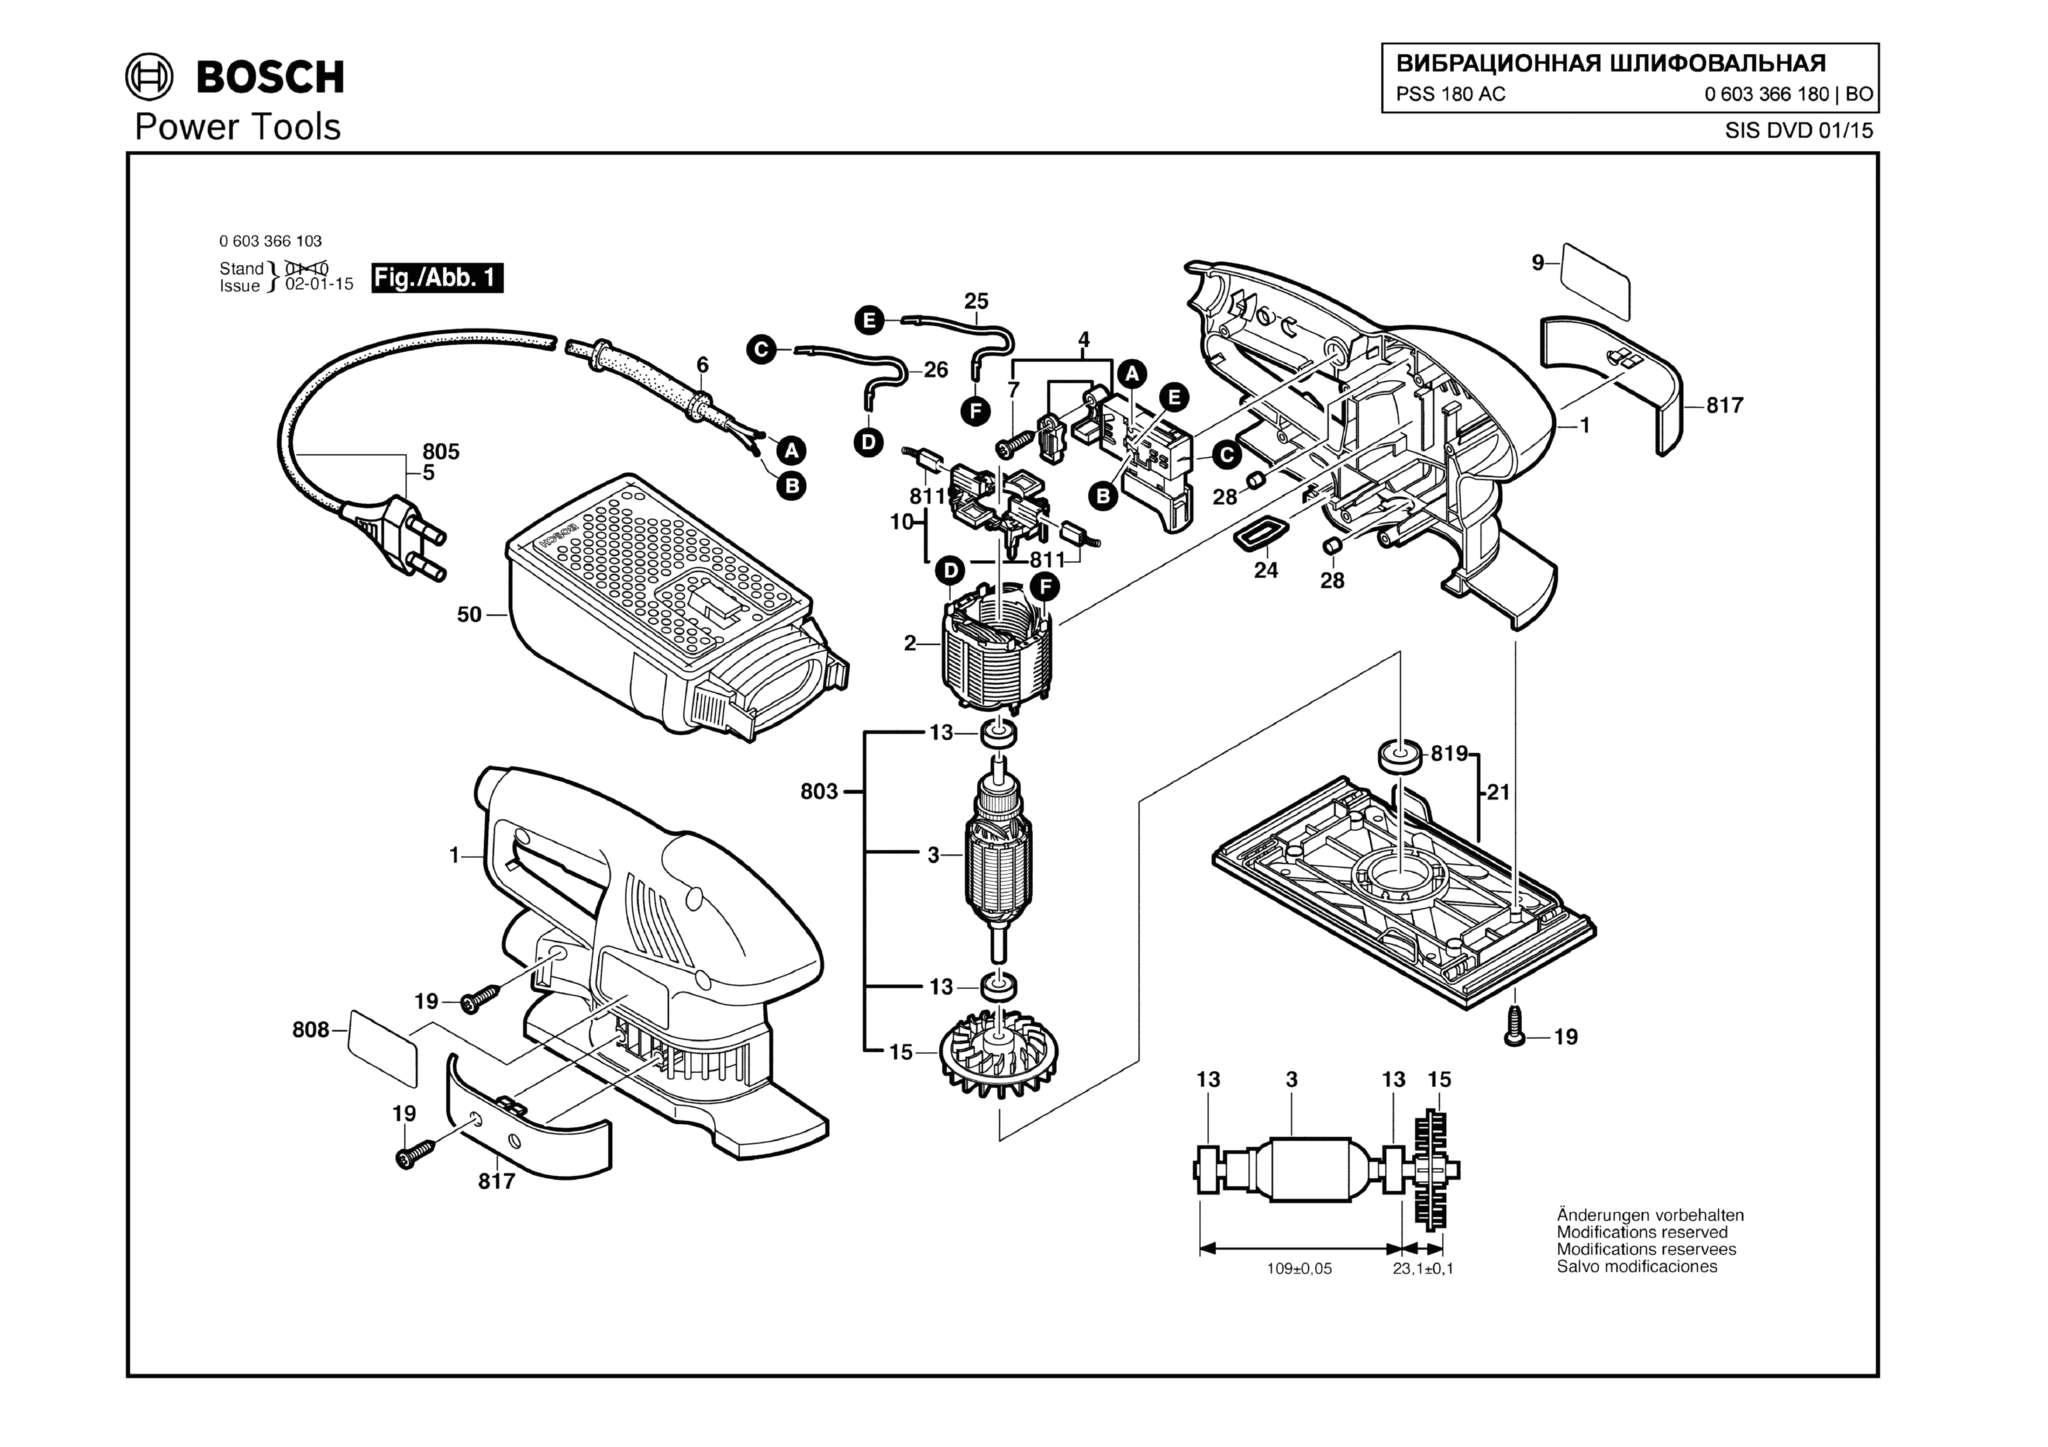 Запчасти, схема и деталировка Bosch PSS 180 AC (ТИП 0603366180)